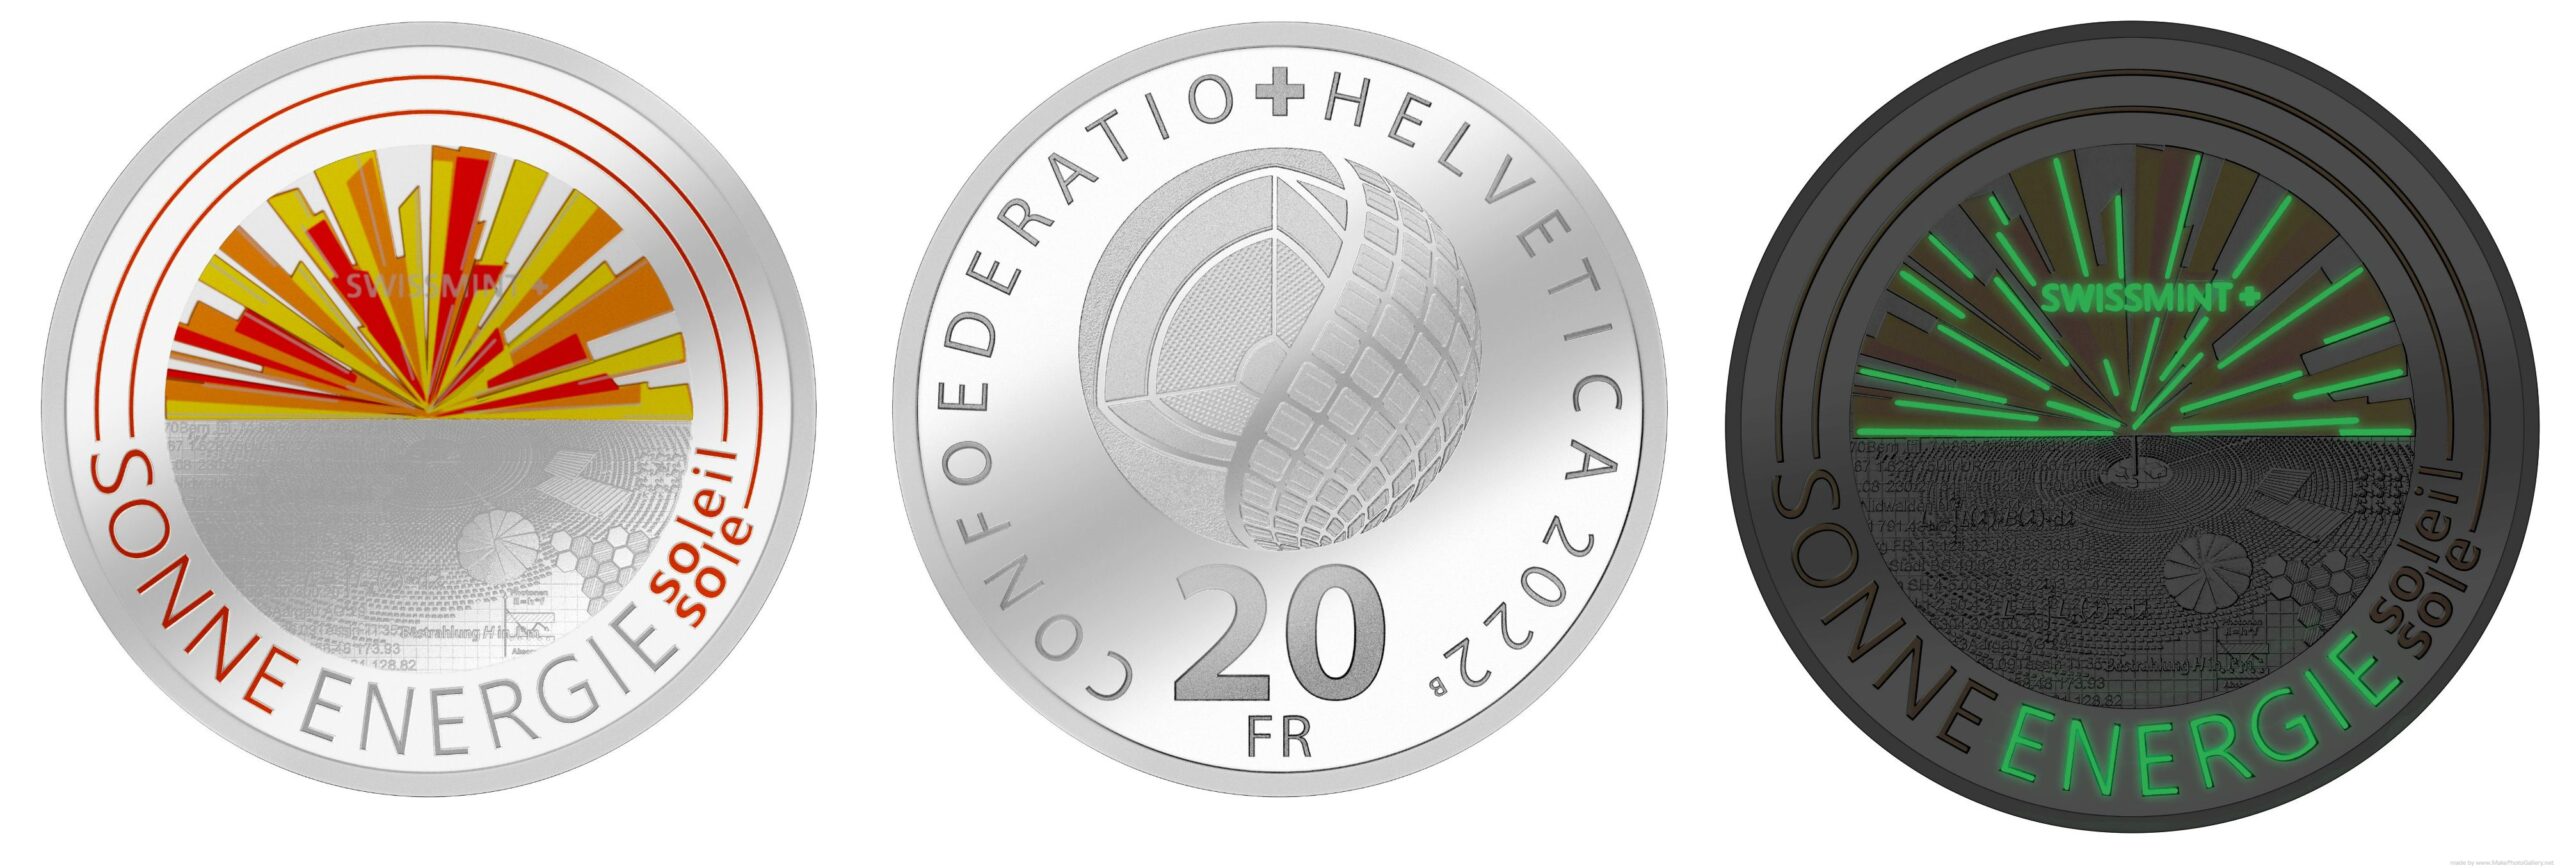 La moneta d’argento "Energia solare" svizzera da 20 franchi